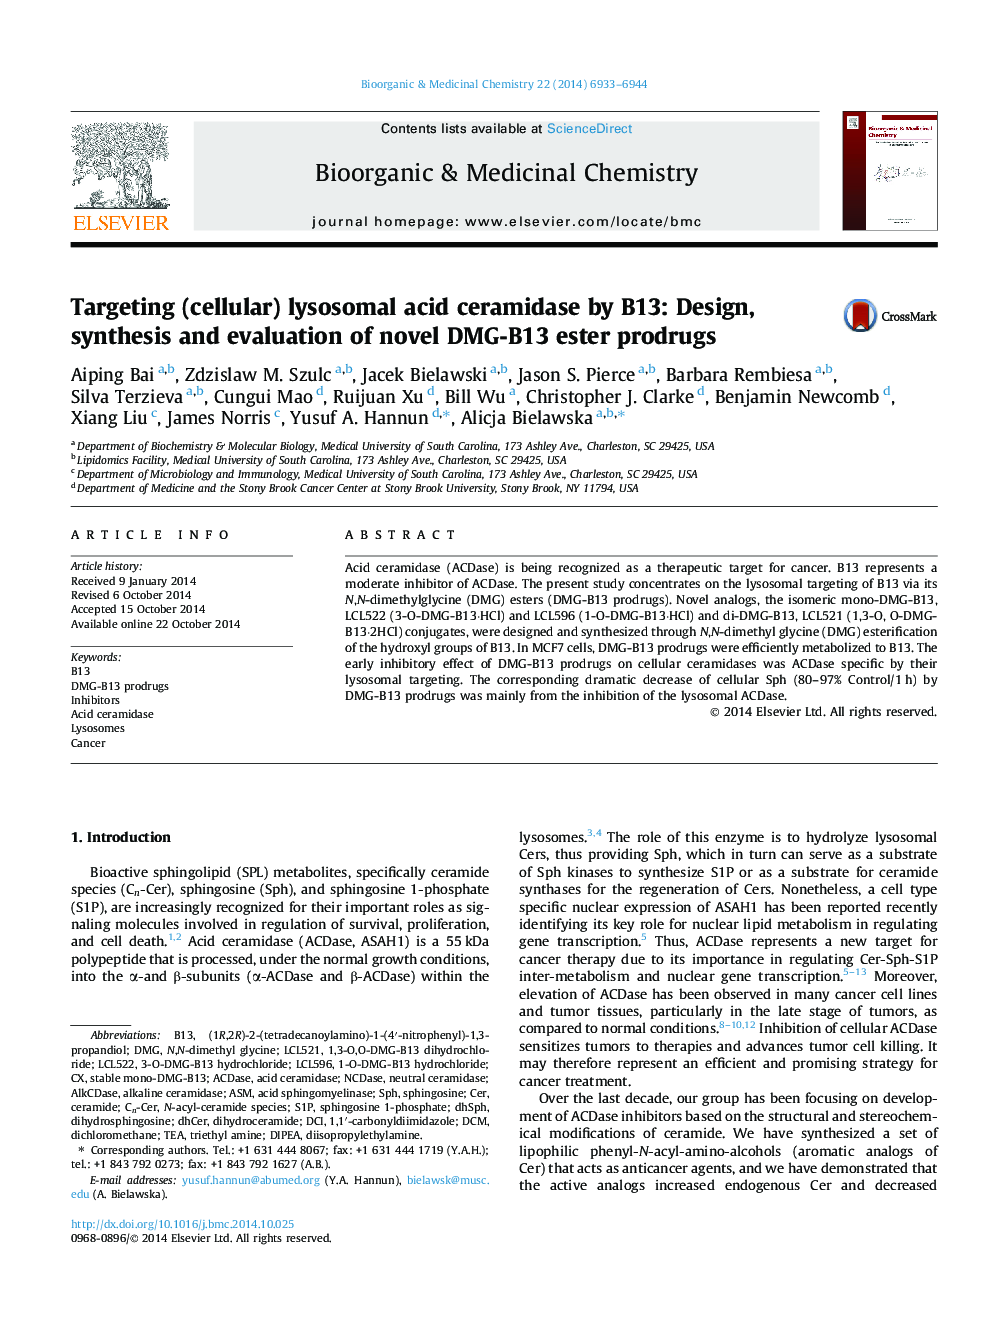 Targeting (cellular) lysosomal acid ceramidase by B13: Design, synthesis and evaluation of novel DMG-B13 ester prodrugs